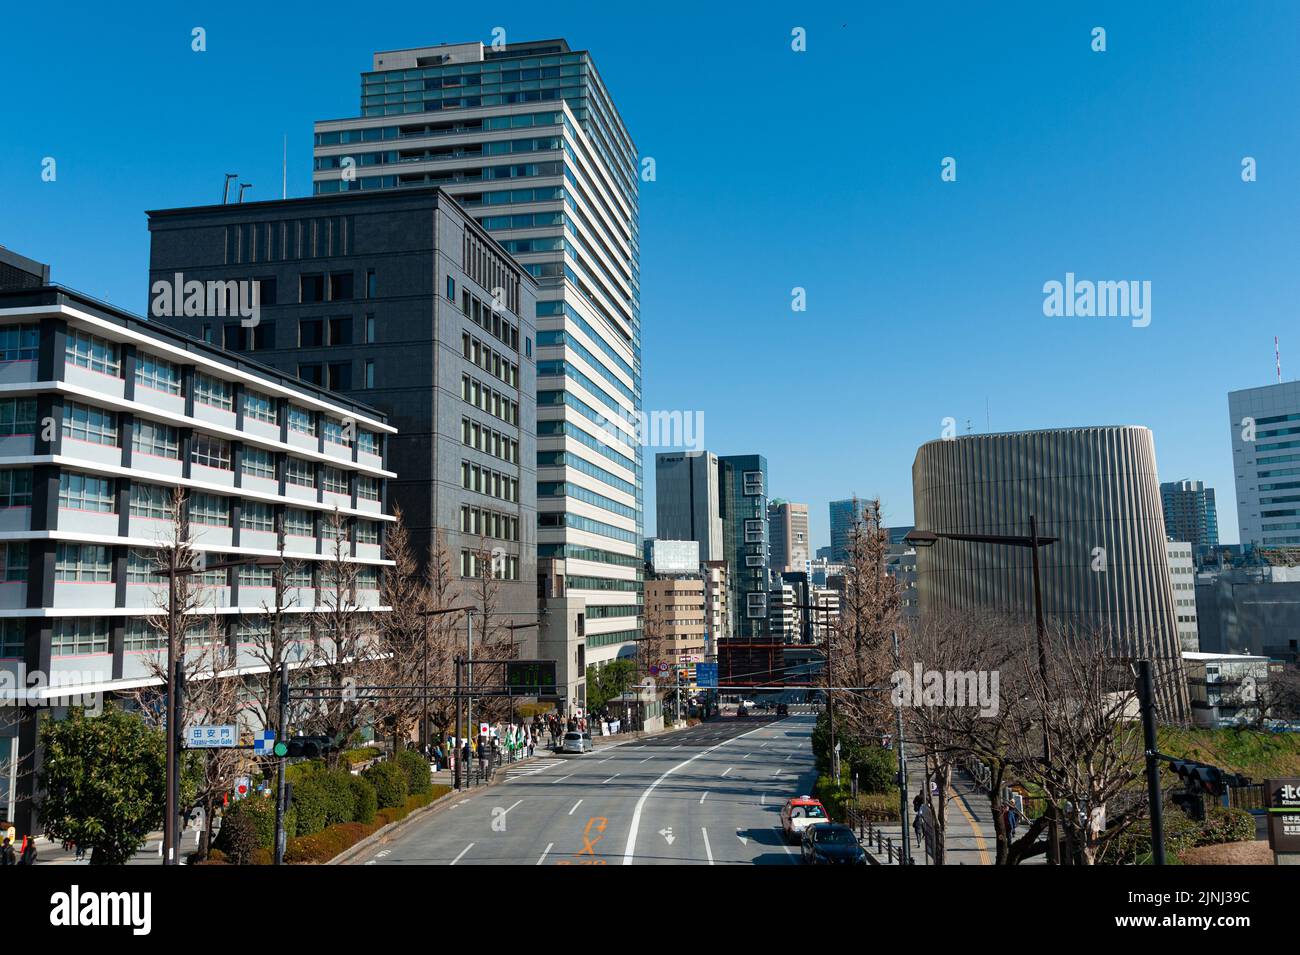 Chiyoda City, Tokyo, Japan - January 02, 2020: Yasukuni or Yasukuni-dori street in beautiful blue sky day. Stock Photo